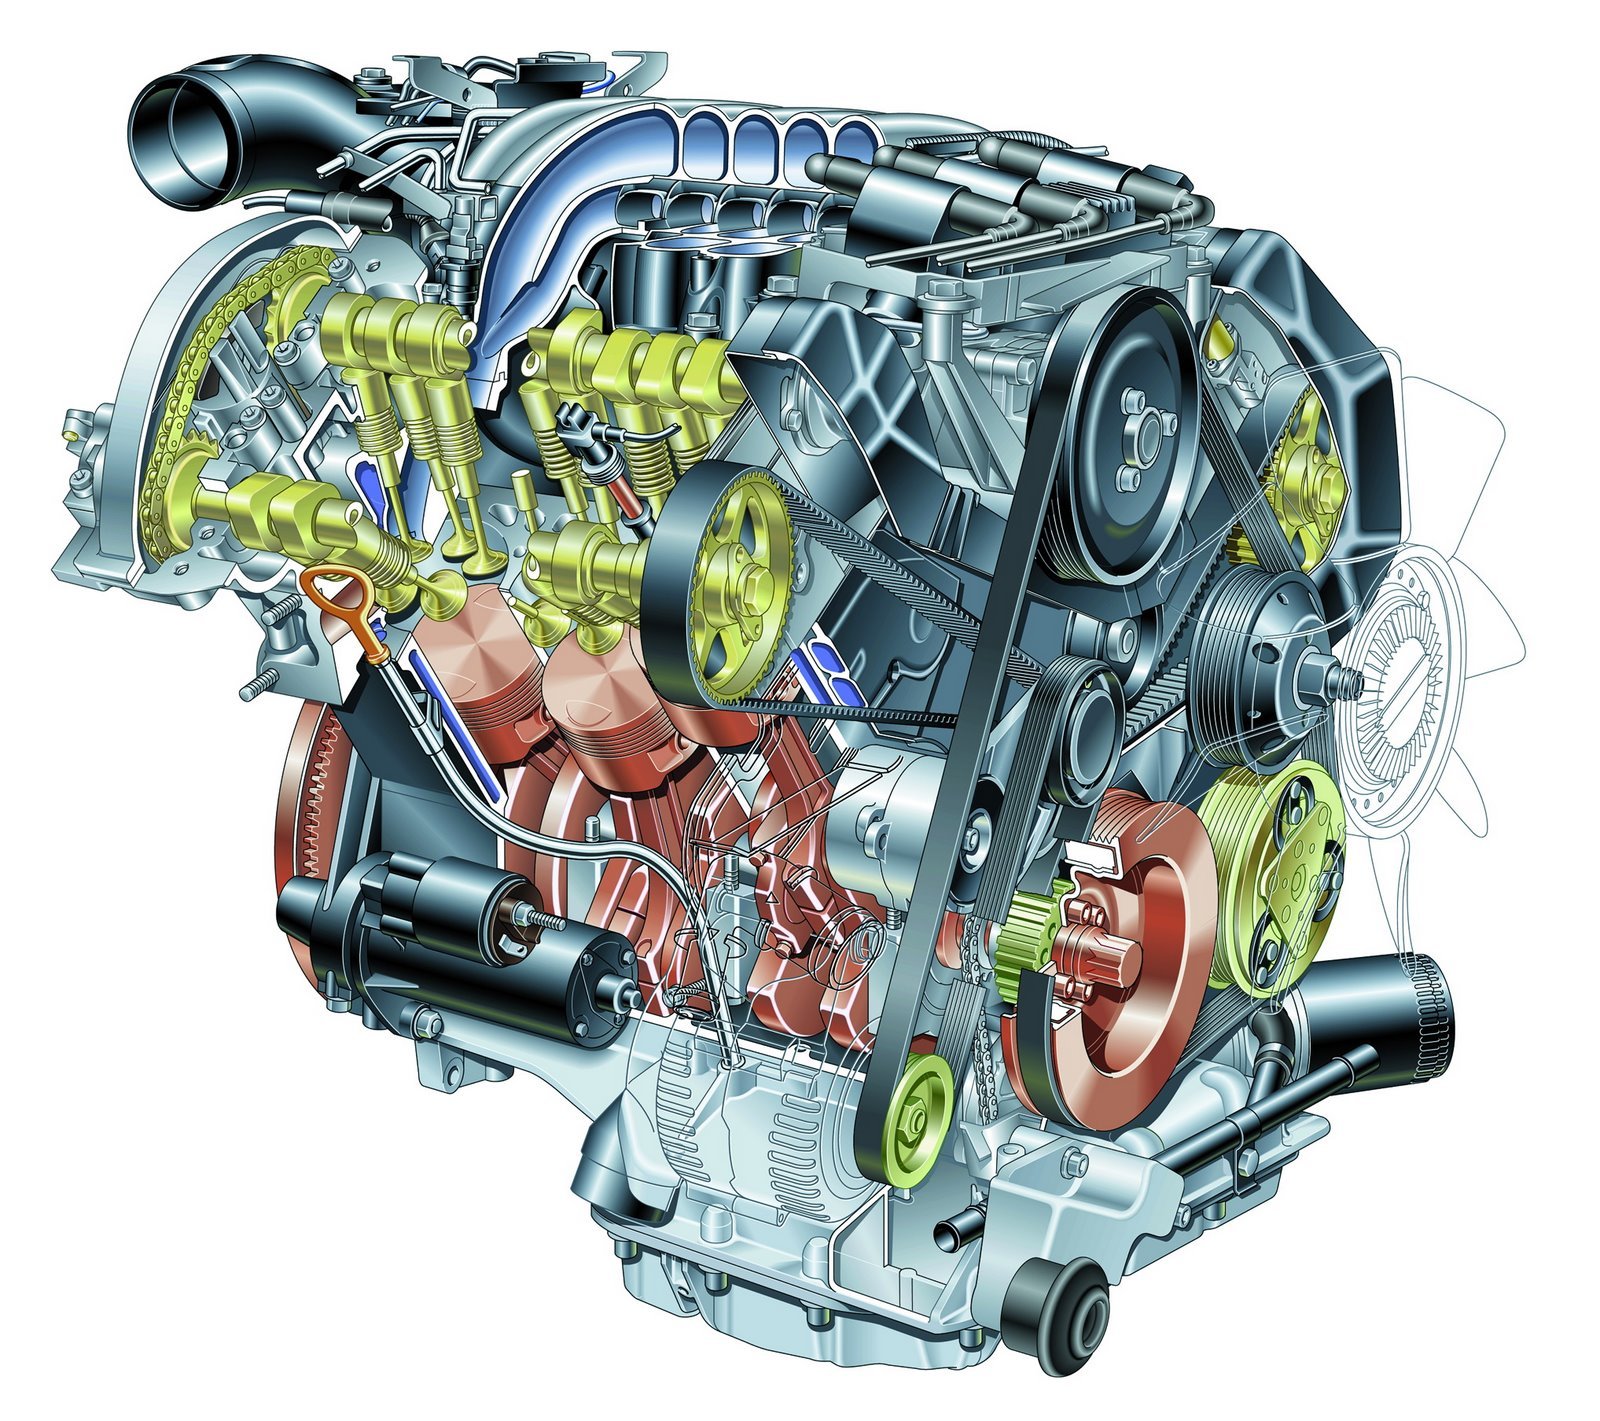 V 3.2 0. Двигатель 2.8 Пассат б5. VW Passat b5 1.8 двигатель. Volkswagen Passat b5 двигатель. VW Passat b5 v6 2.8.